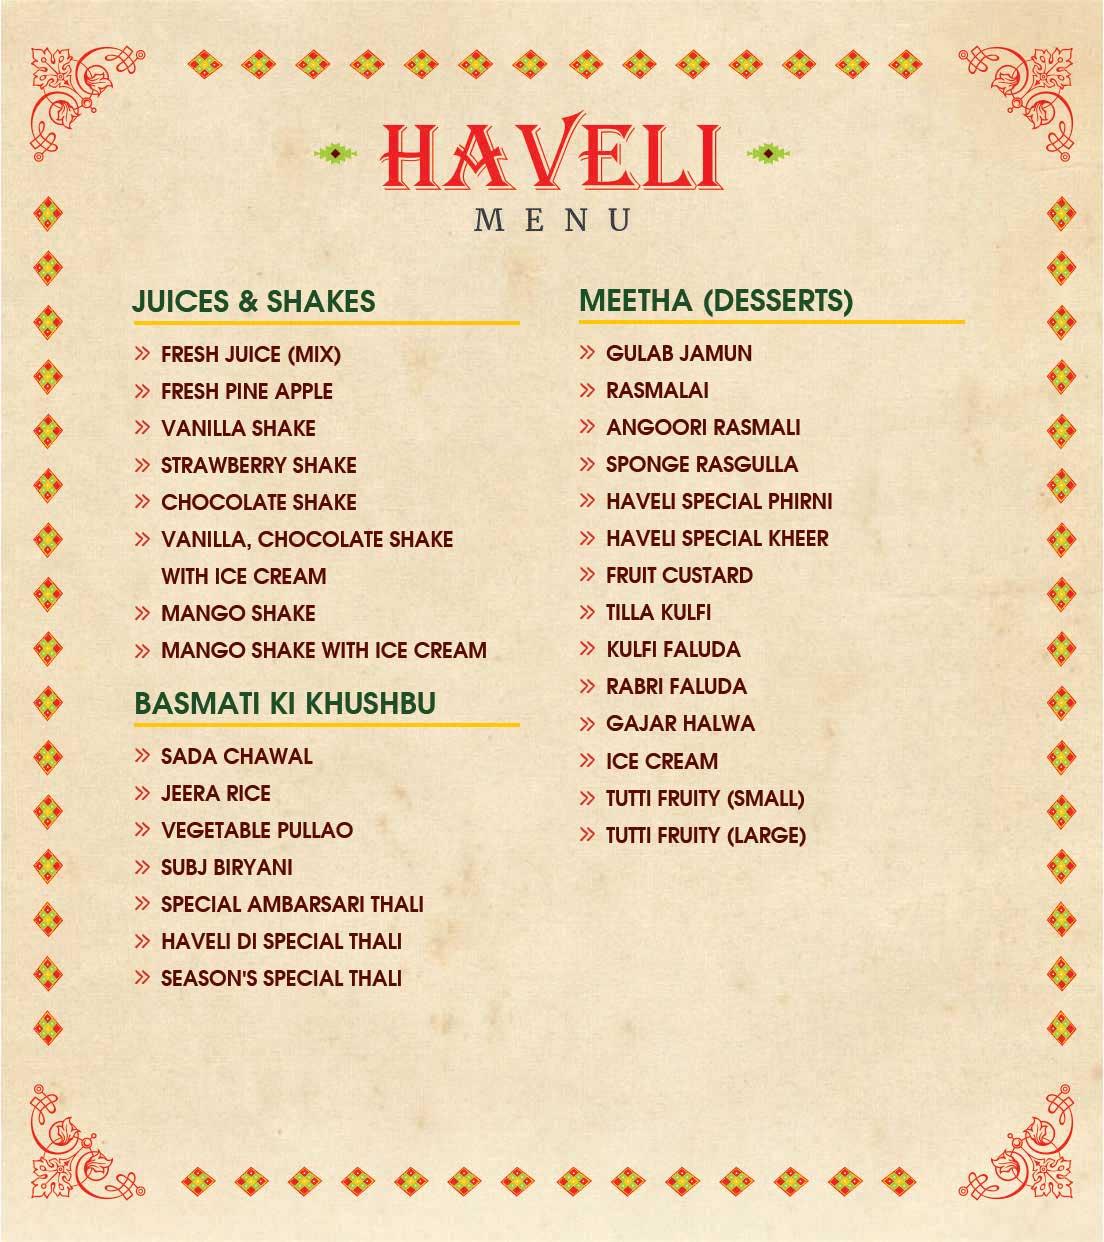 Haveli restaurant Amritsar near Golden temple